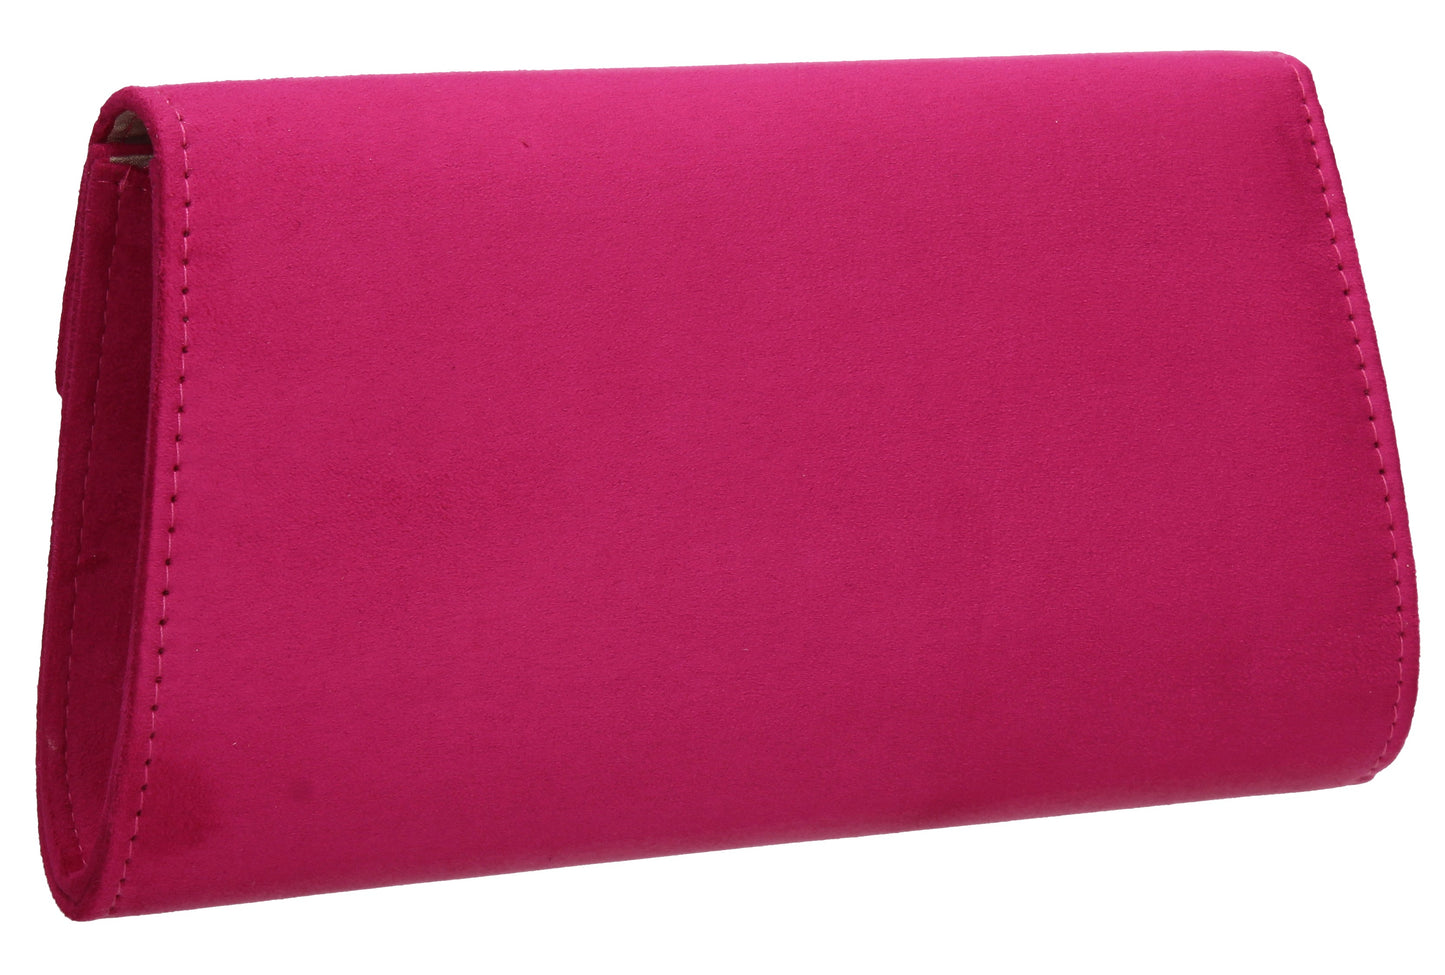 SWANKYSWANS Harper Clutch Bag Fuchsia Pink Cute Cheap Clutch Bag For Weddings School and Work